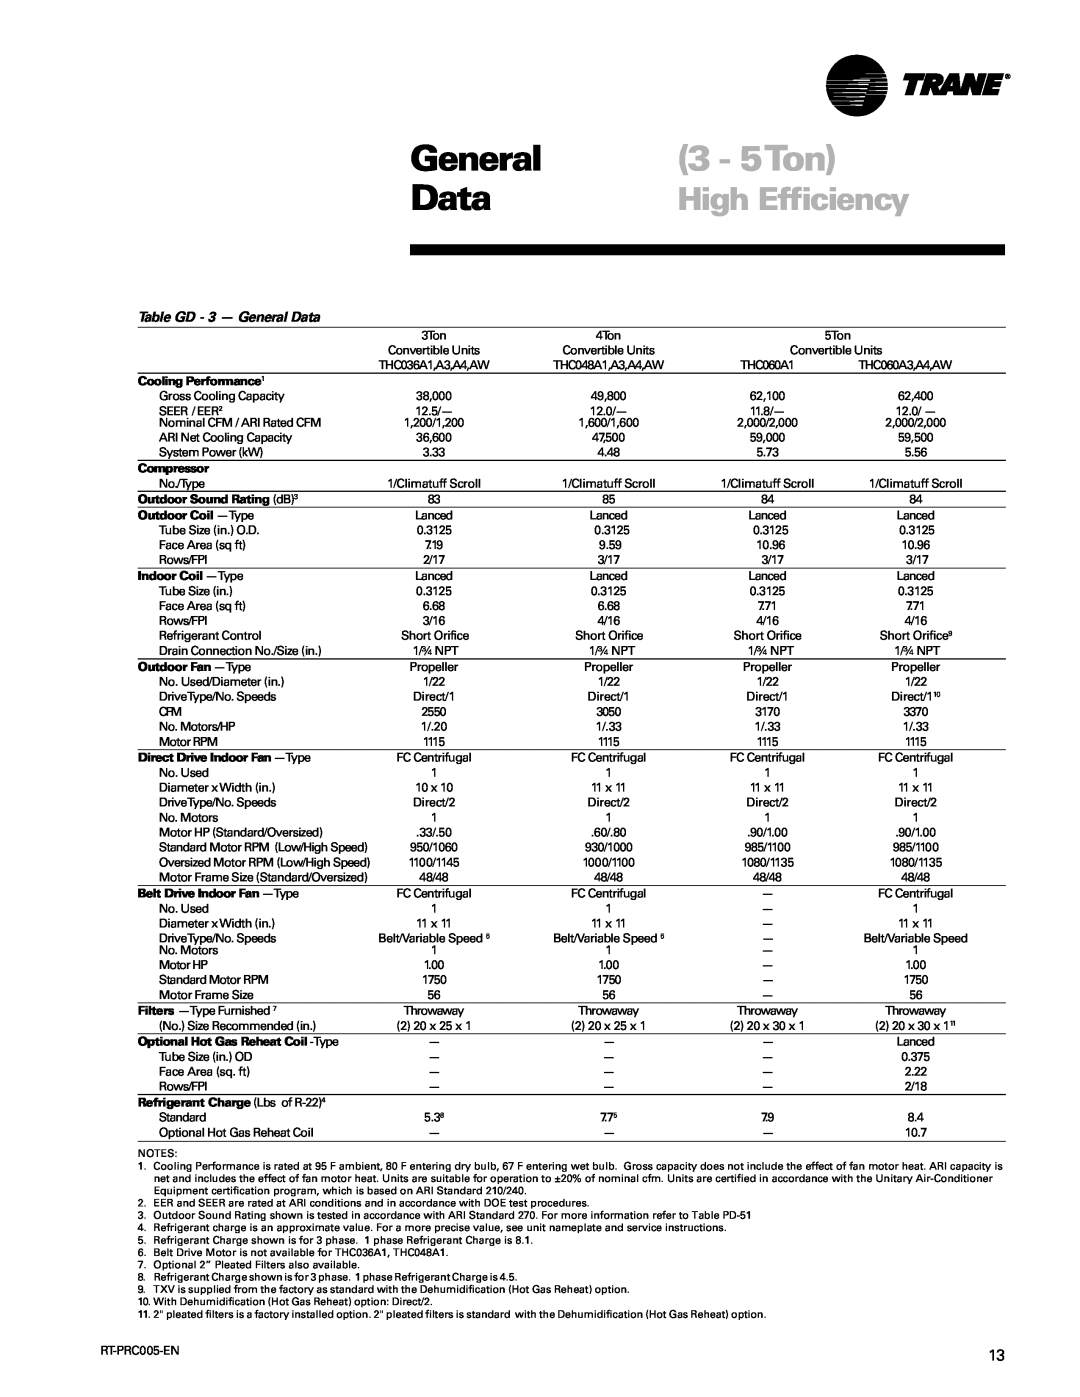 Trane RT-PRC005 manual High Efficiency, 3 - 5Ton, Table GD - 3 - General Data 